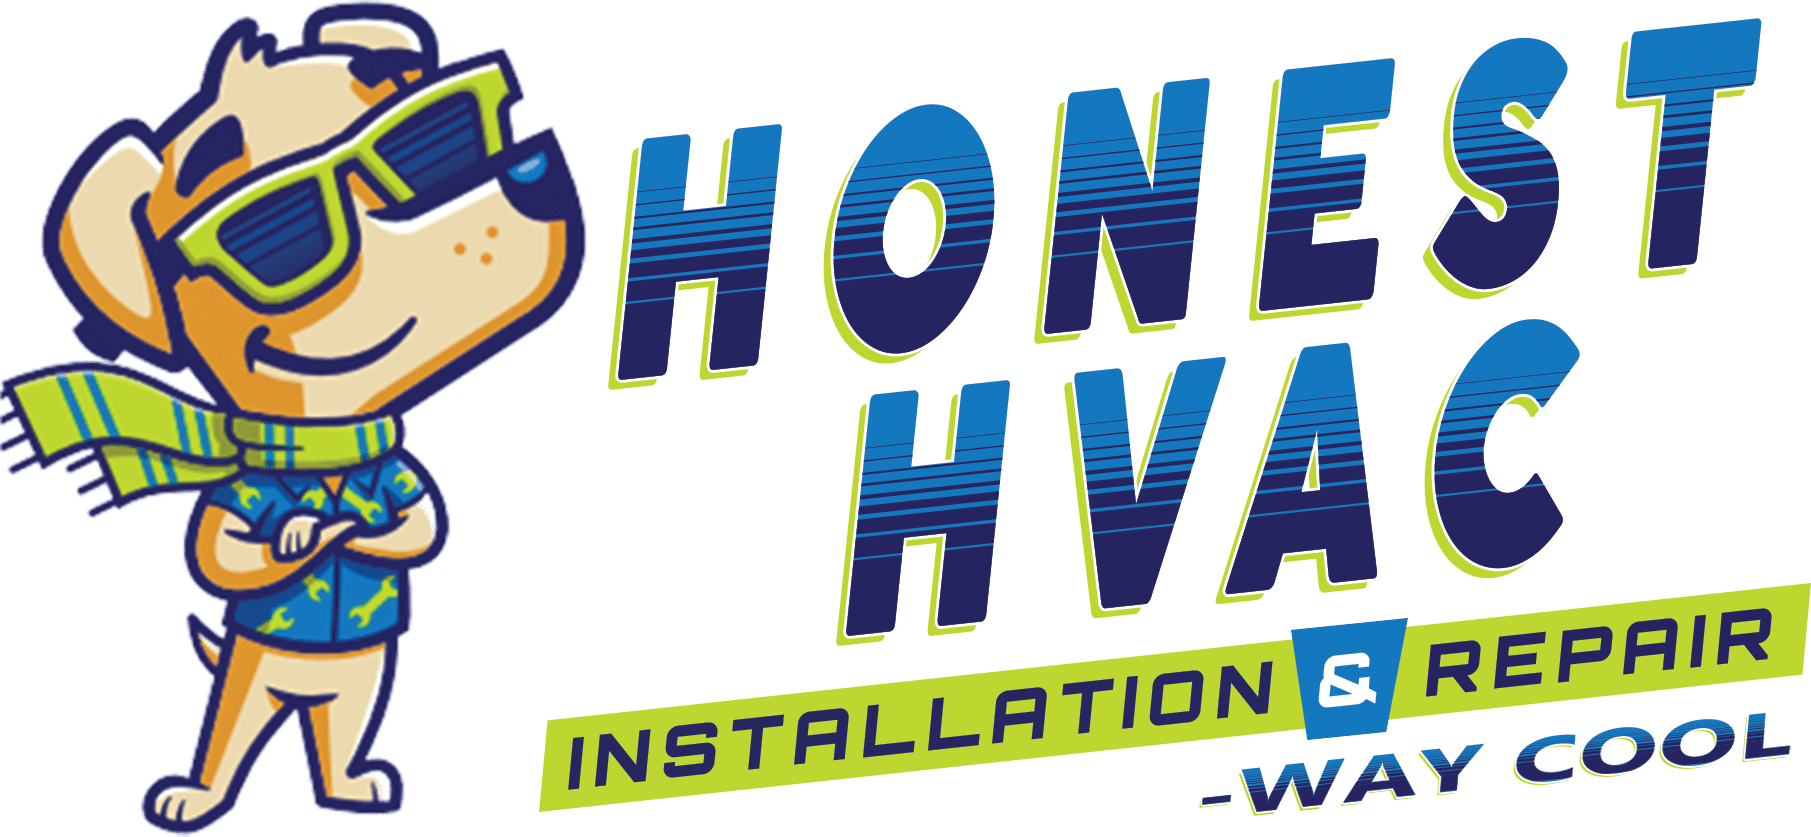 Honest-HVAC-1.png